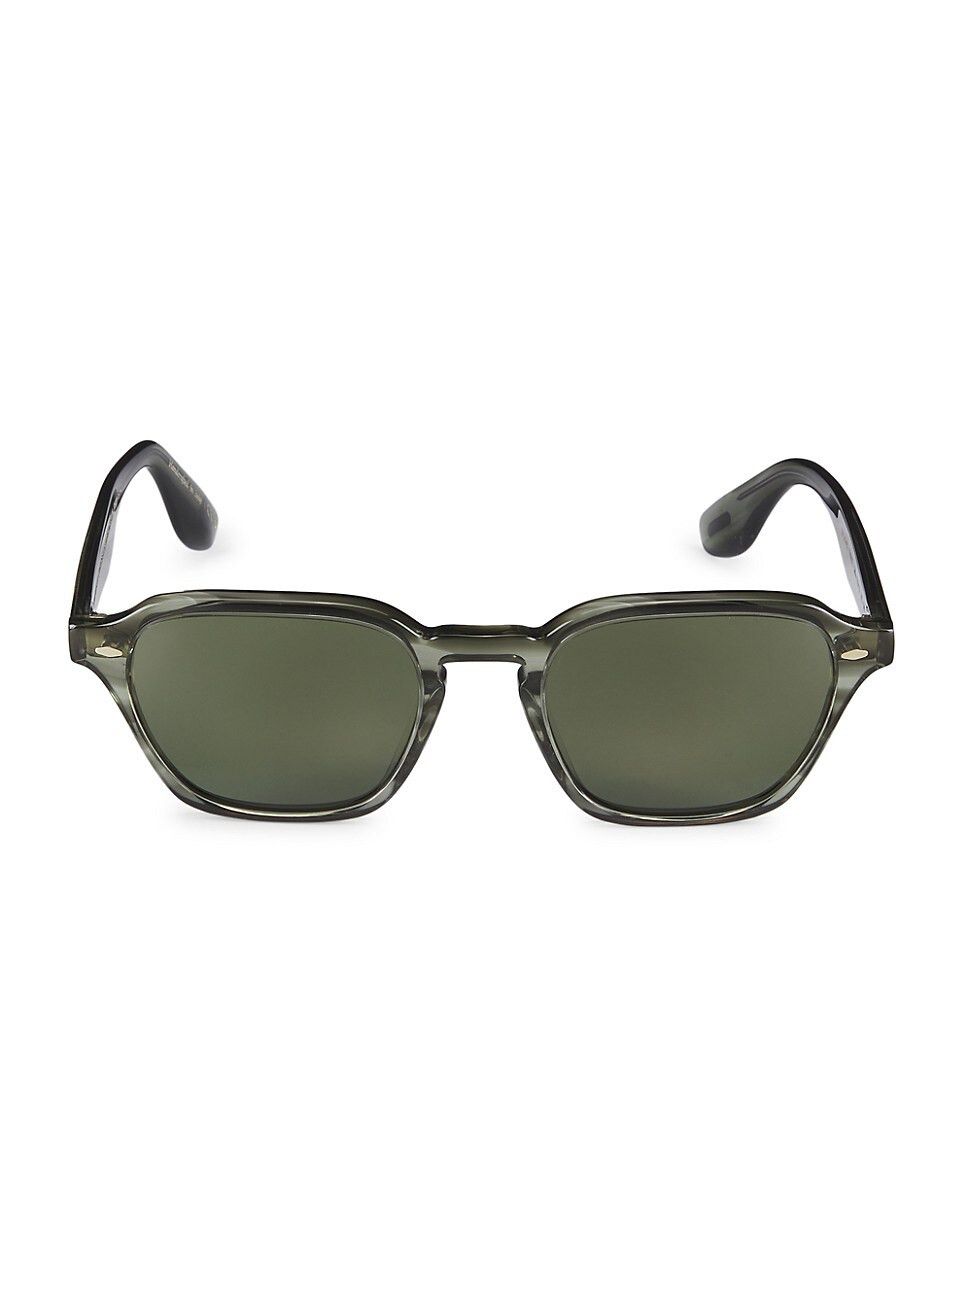 Men's Brunello Cucinelli x Oliver Peoples 52MM Griffo Acetate Sunglasses - Green | Saks Fifth Avenue